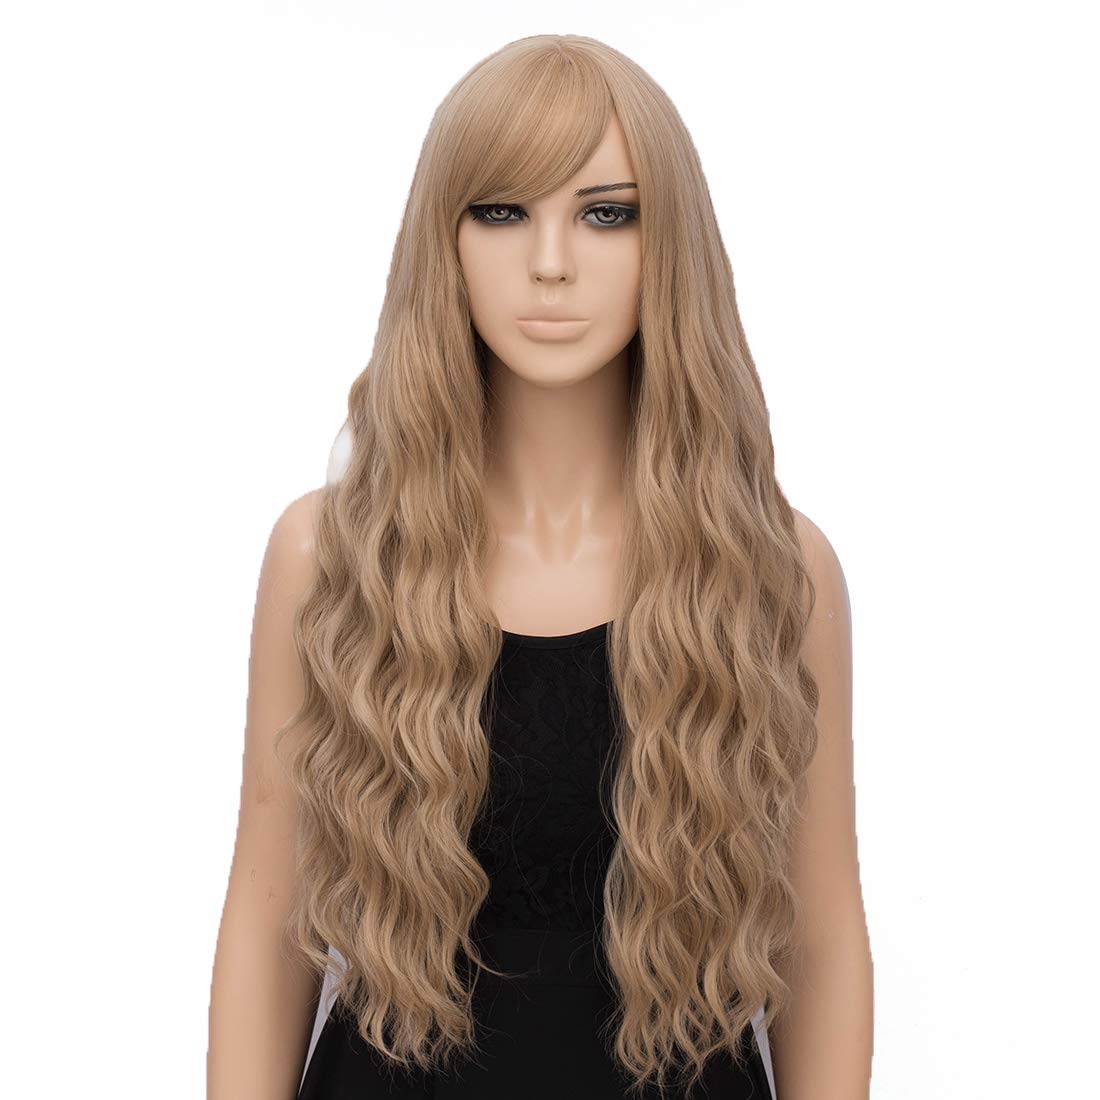 Price:$22.99    netgo Ash Blonde Wig for Women Long Wavy Heat Resistant Fiber Wigs Side Bangs Cosplay Party  Beauty